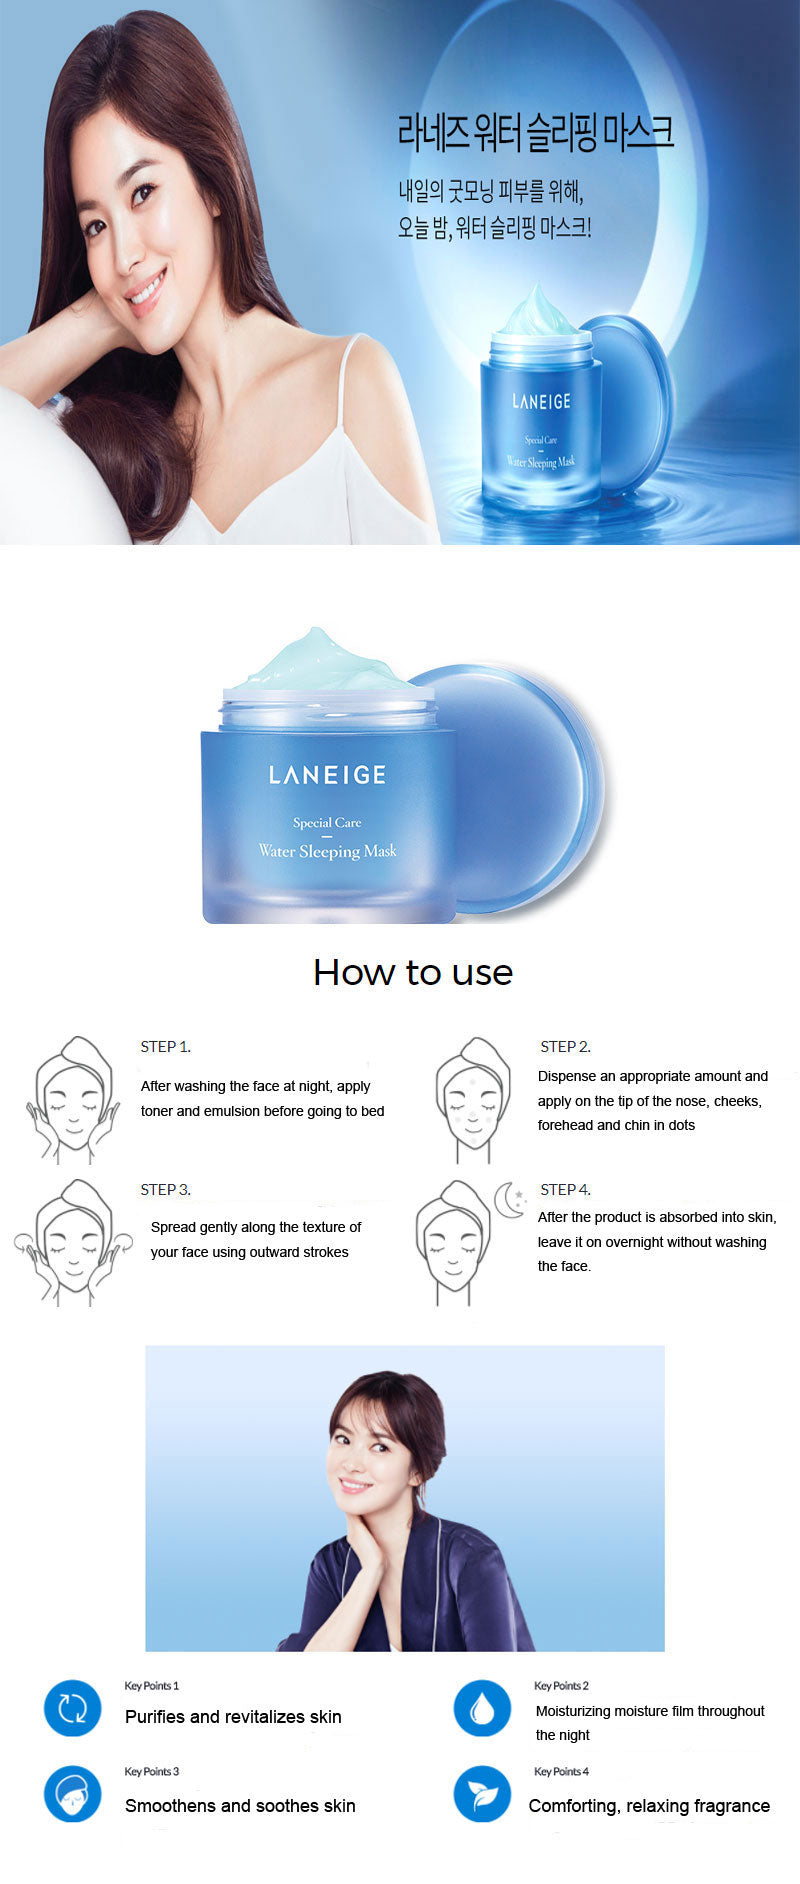 Laneige Water Sleeping Masks 70ml Night Skincare moisturizing